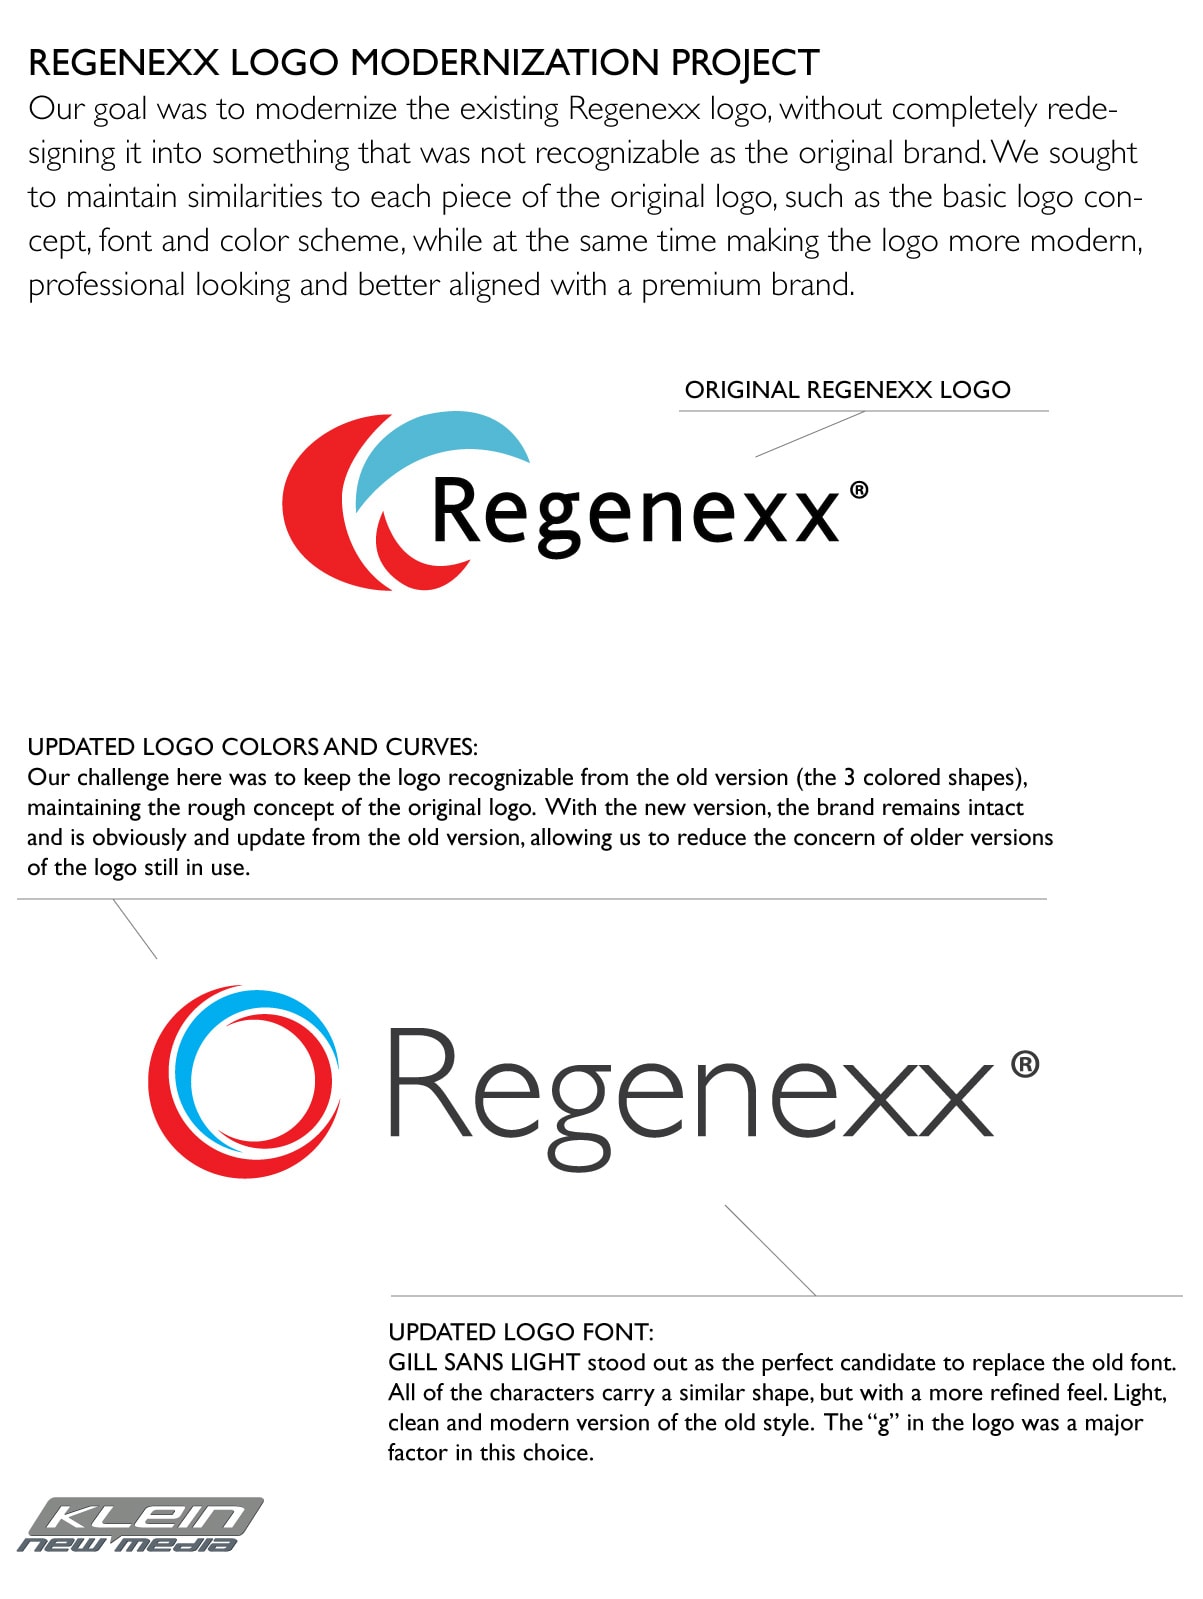 evolving the Regenexx Logo